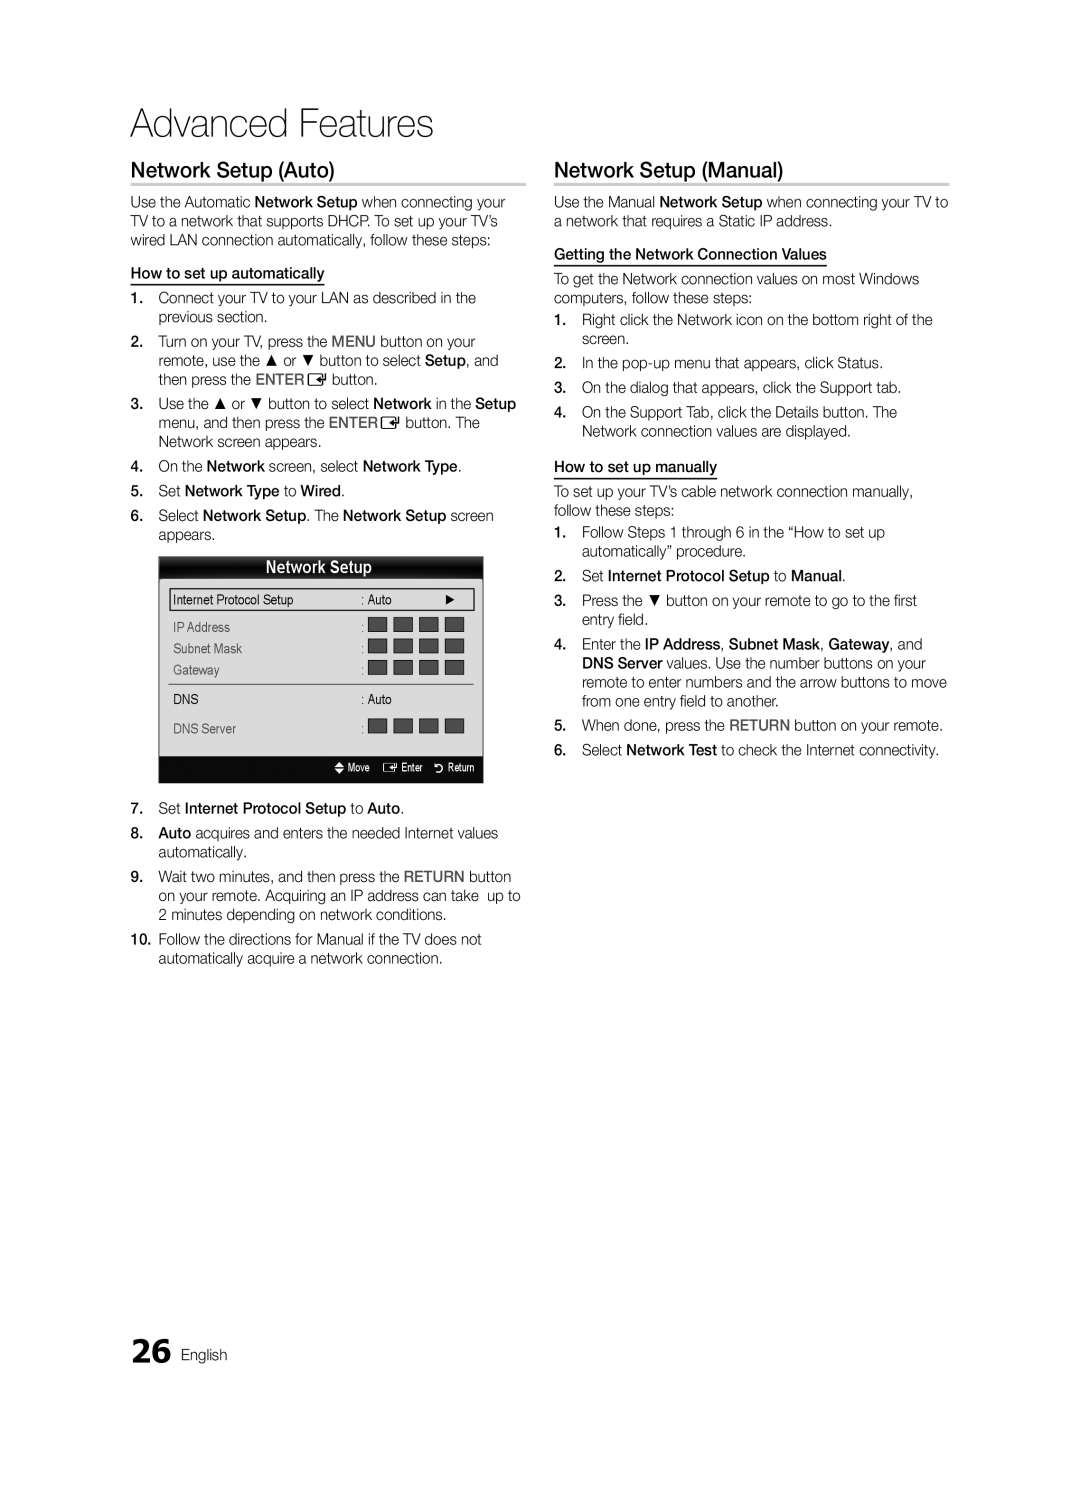 Samsung BN68-03165B-01, UC6300-ZC user manual Network Setup Auto, Network Setup Manual, Advanced Features 